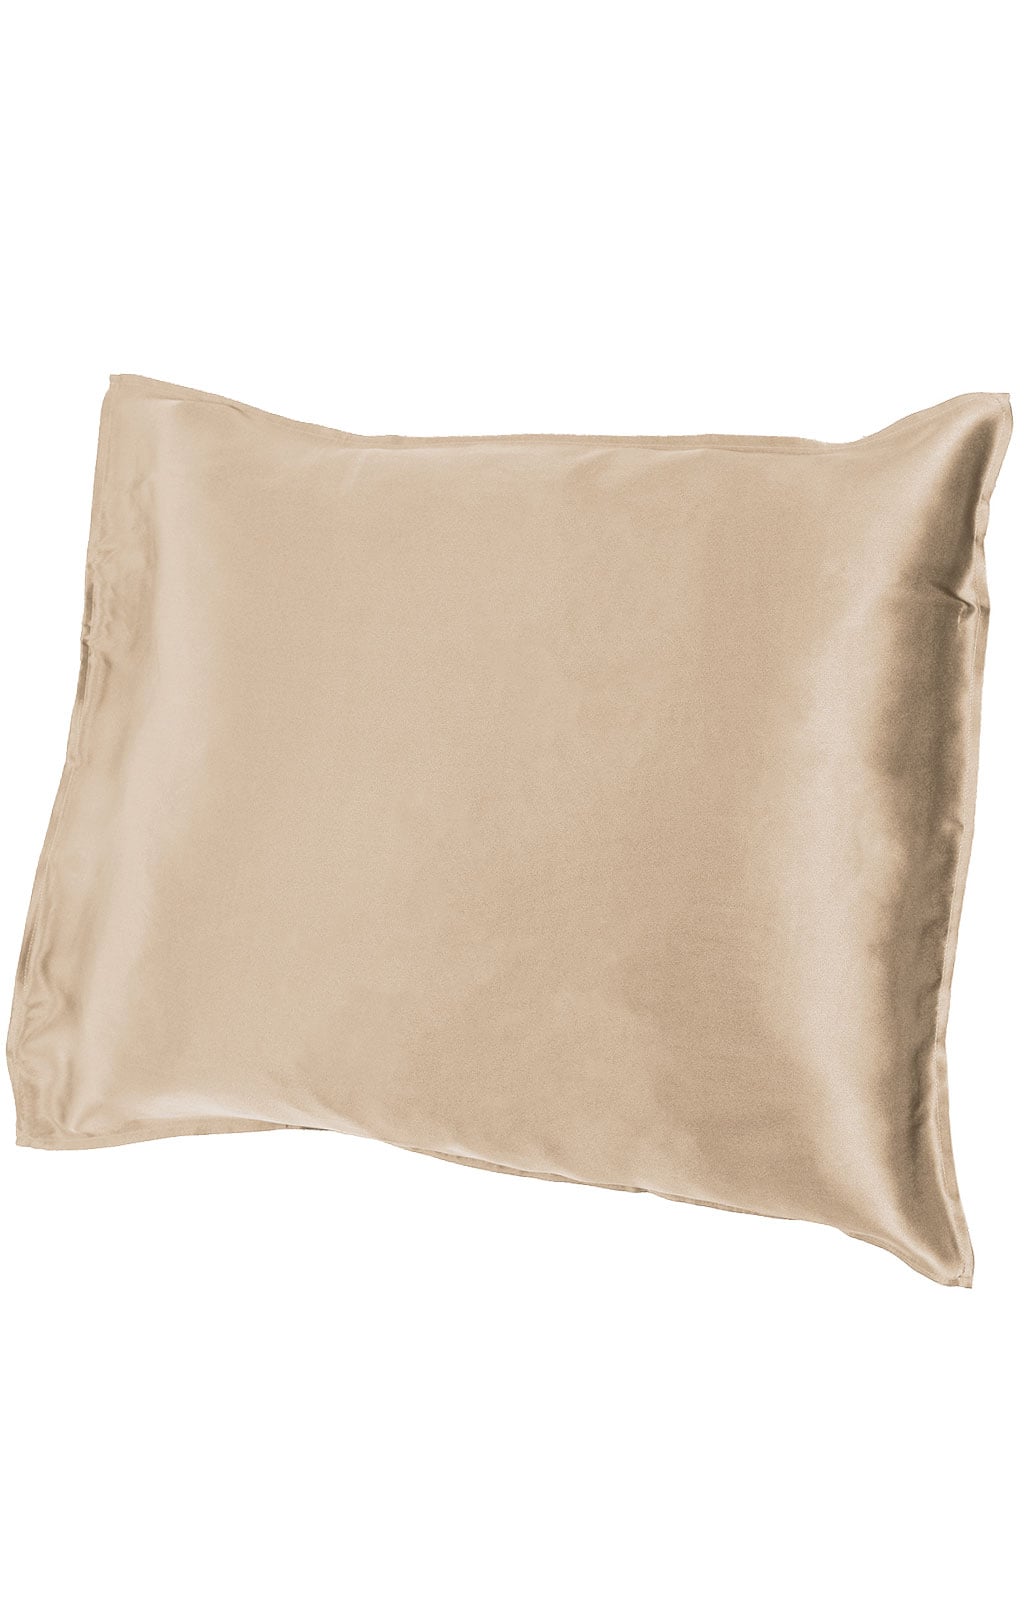 Silk pillowcase, taupe